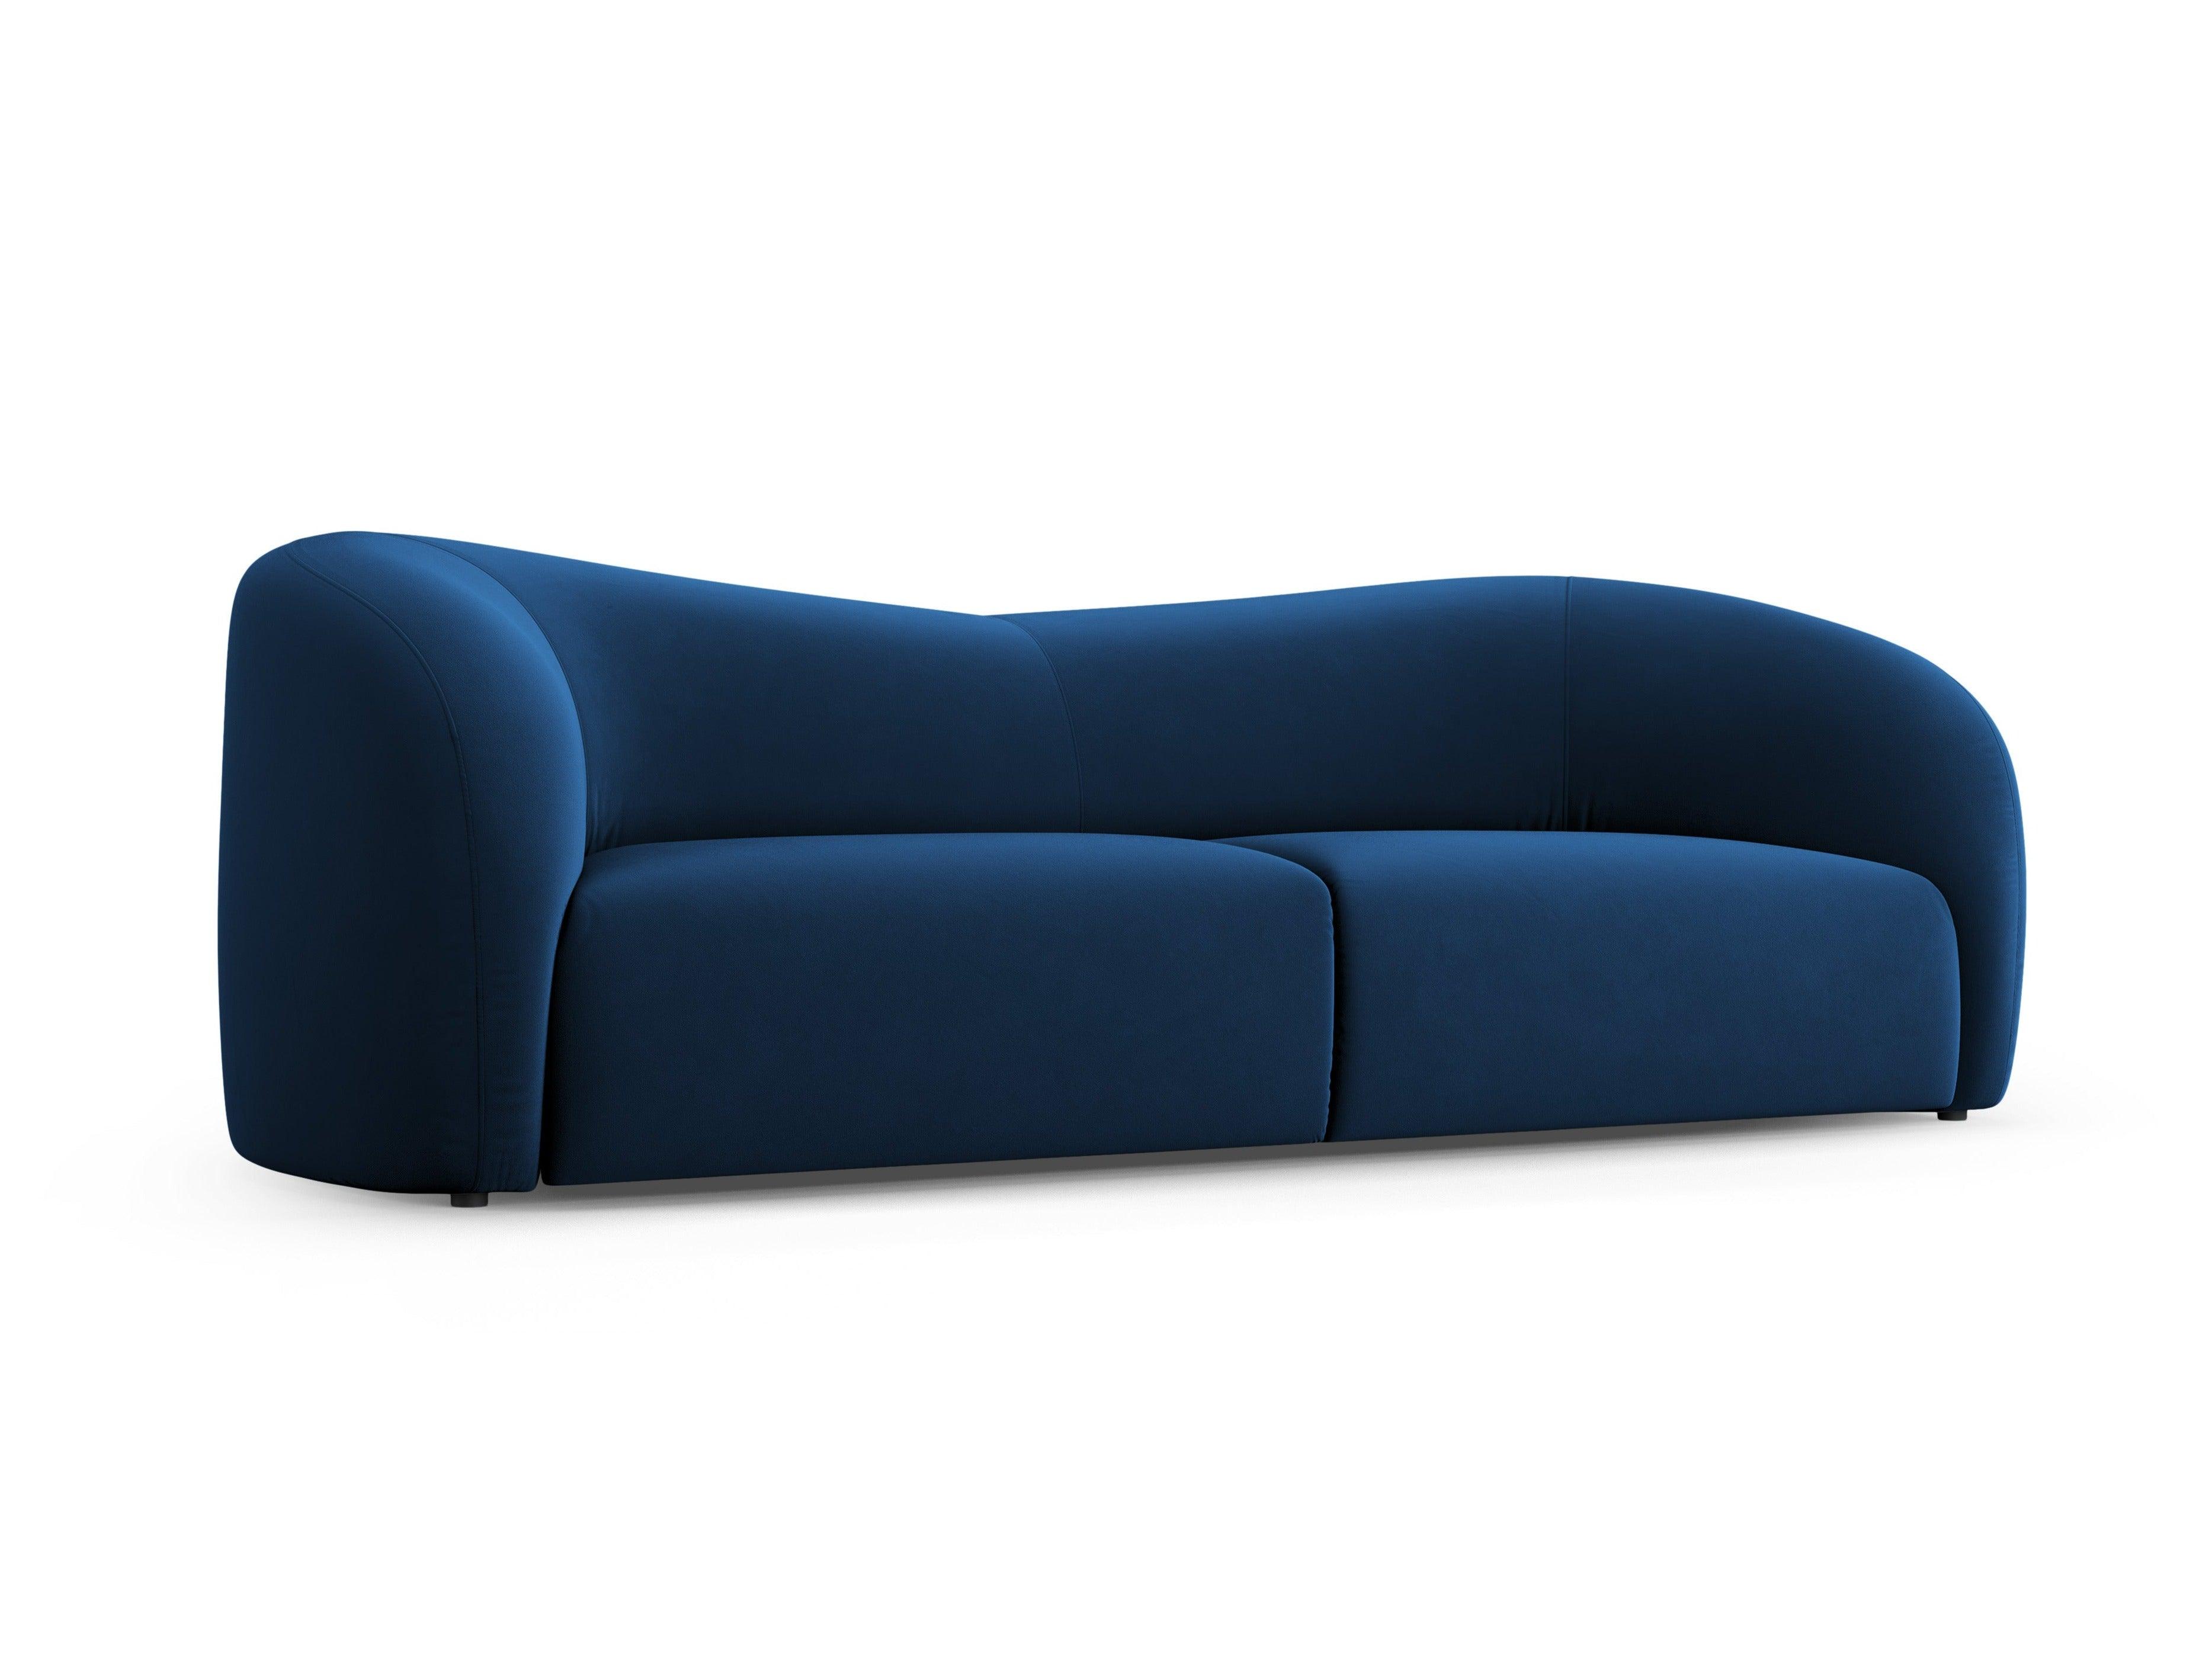 Velvet Sofa, "Santi", 3 Seats, Royal Blue, 237x90x75
Made in Europe Interieurs 86    Eye on Design